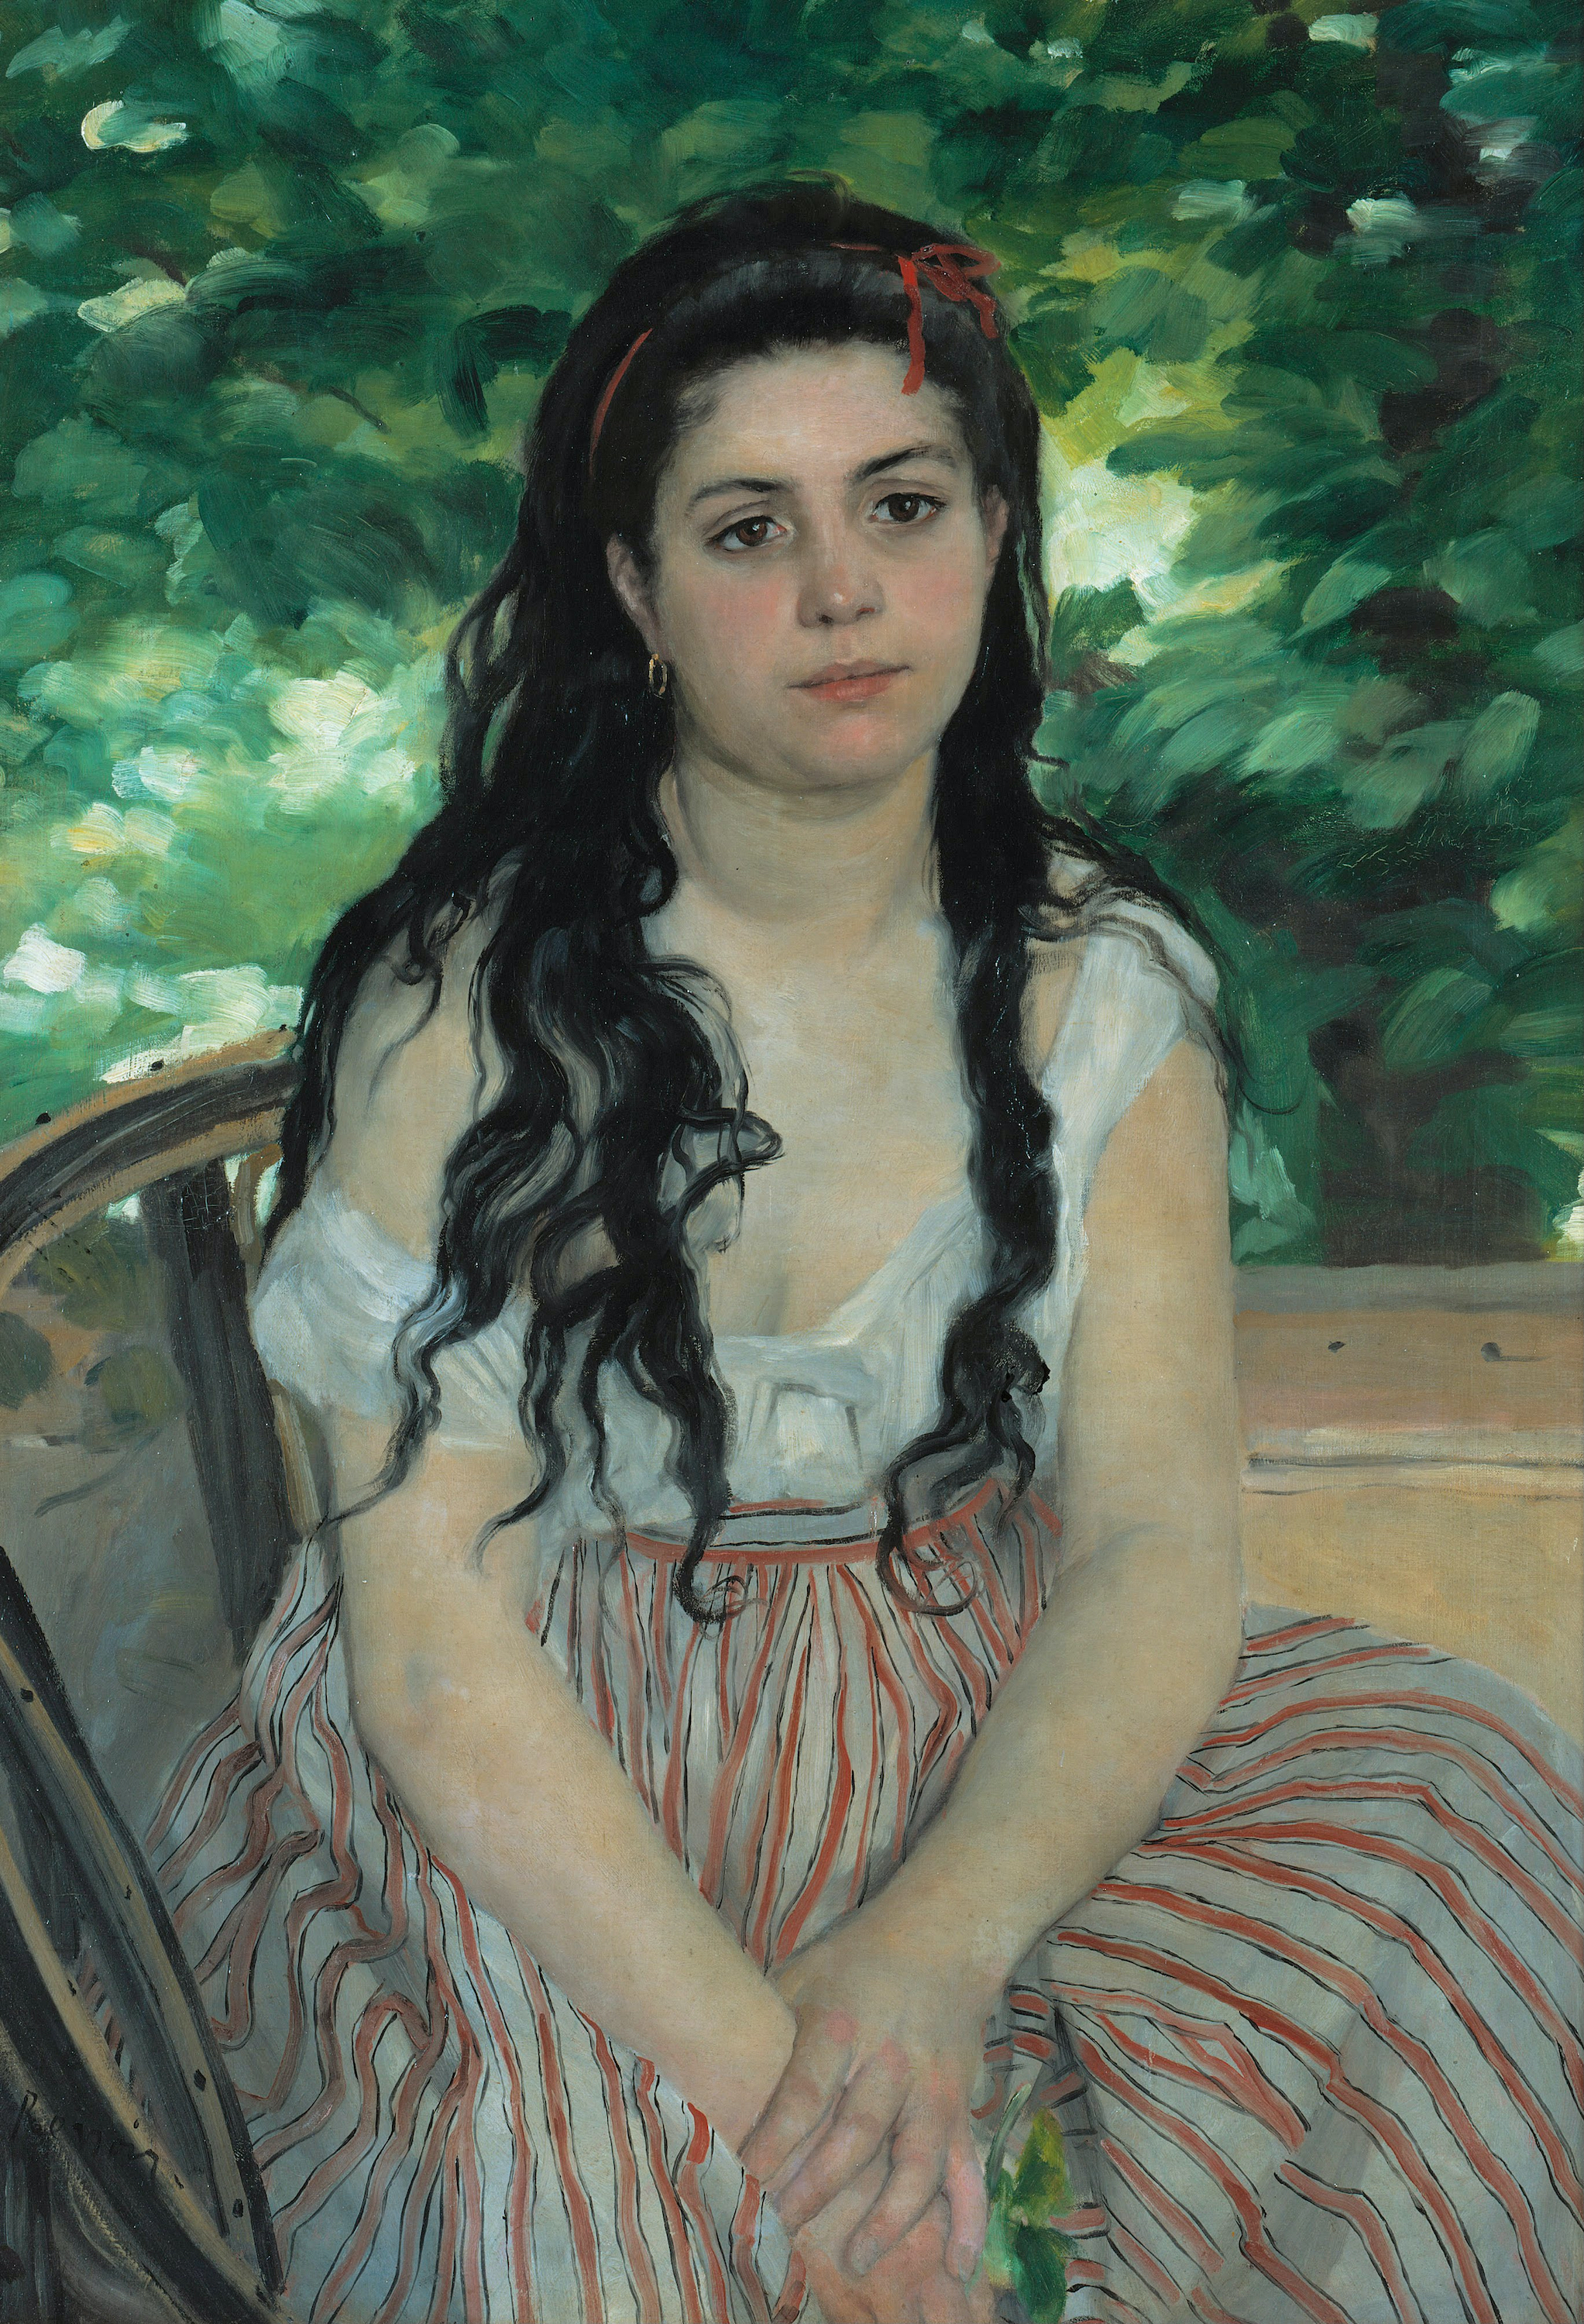 Summer by Pierre-Auguste Renoir - 1868 - 59 x 85 cm Alte Nationalgalerie